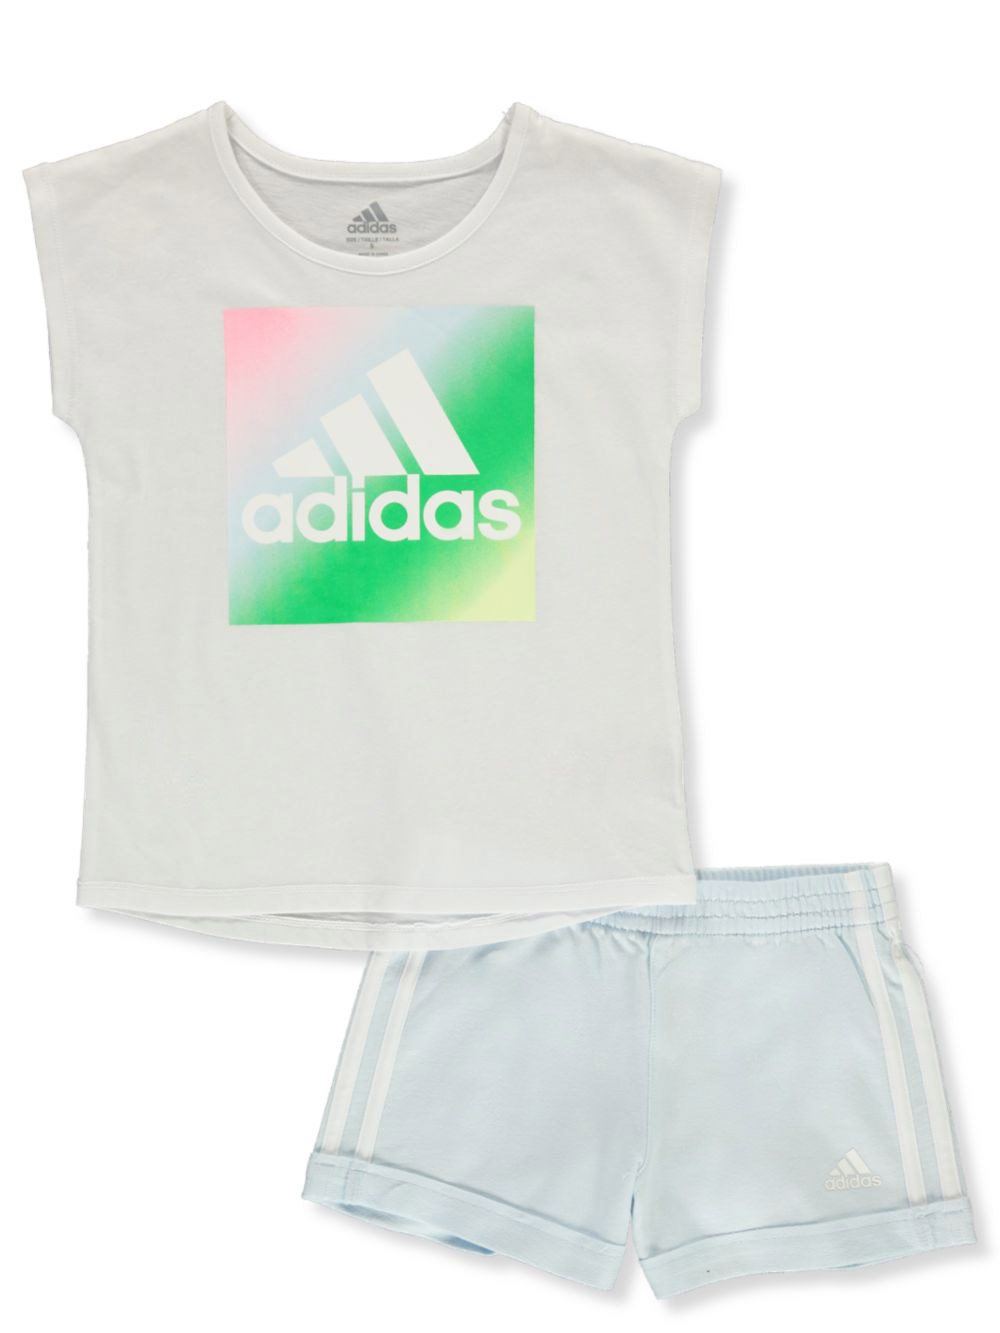 Adidas Sets